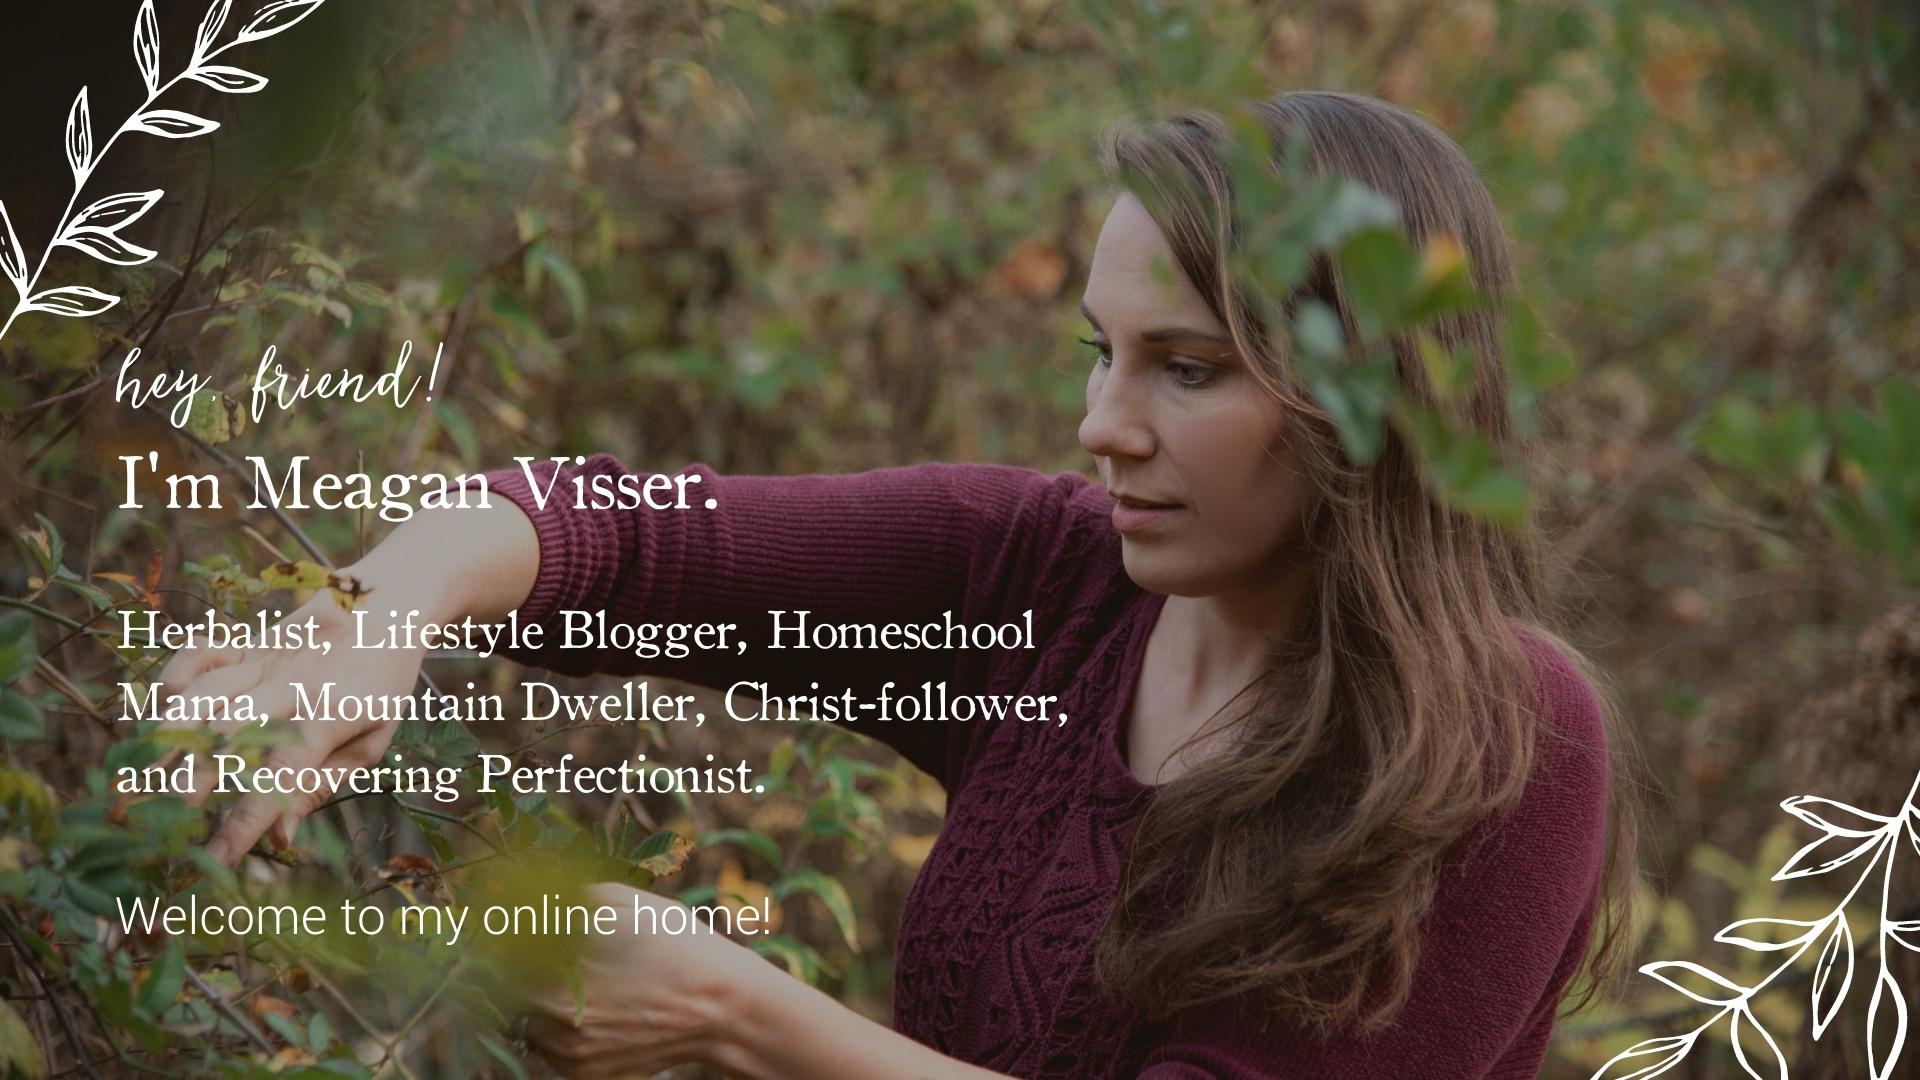 Growing Up Herbal about Meagan Visser